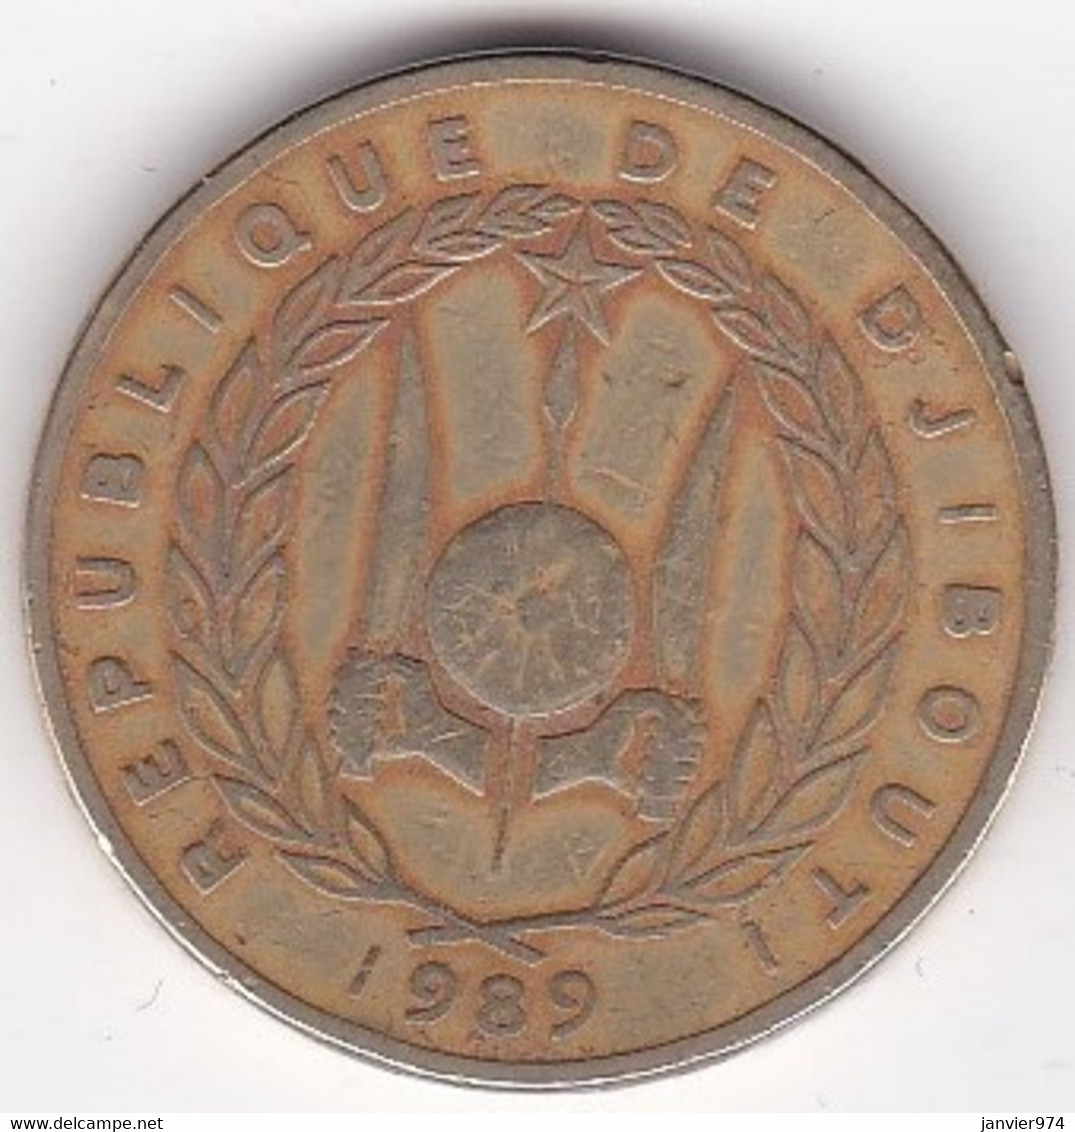 Djibouti 500 Francs 1989, Bronze-aluminium, KM# 27 - Dschibuti